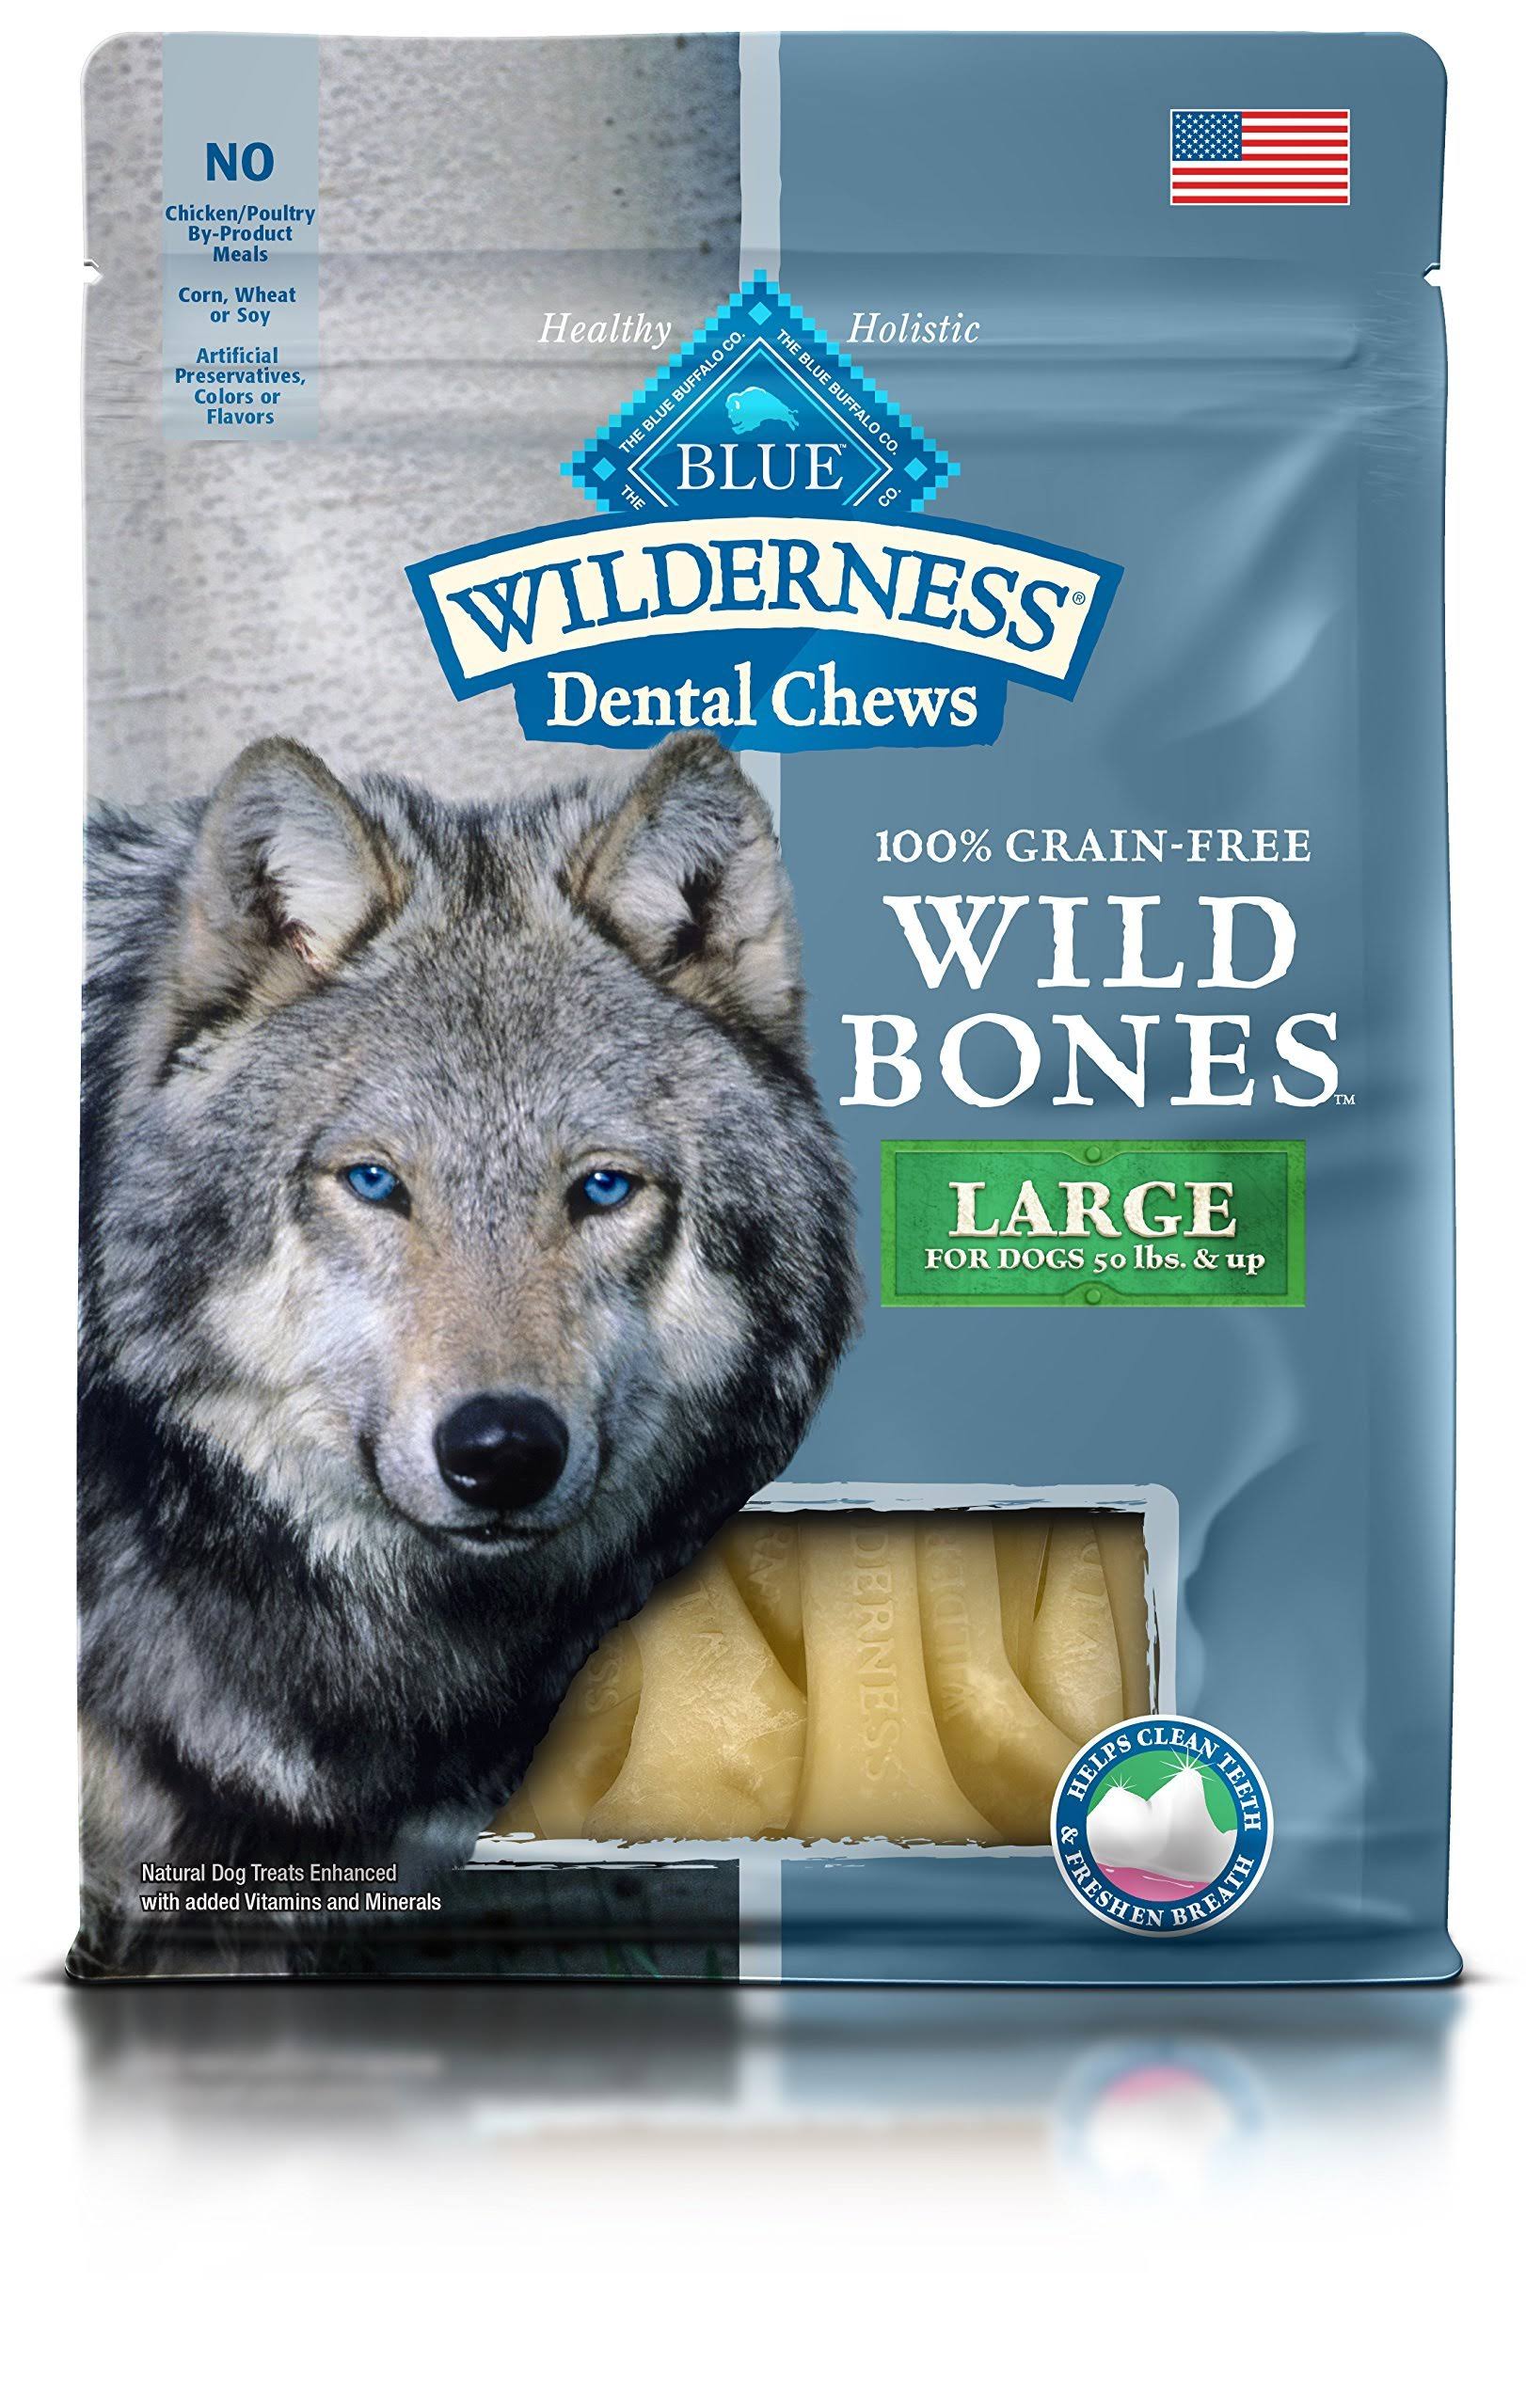 Blue Buffalo Wilderness Dental Chews Dog Treats - Wild Bones, Large, 10oz